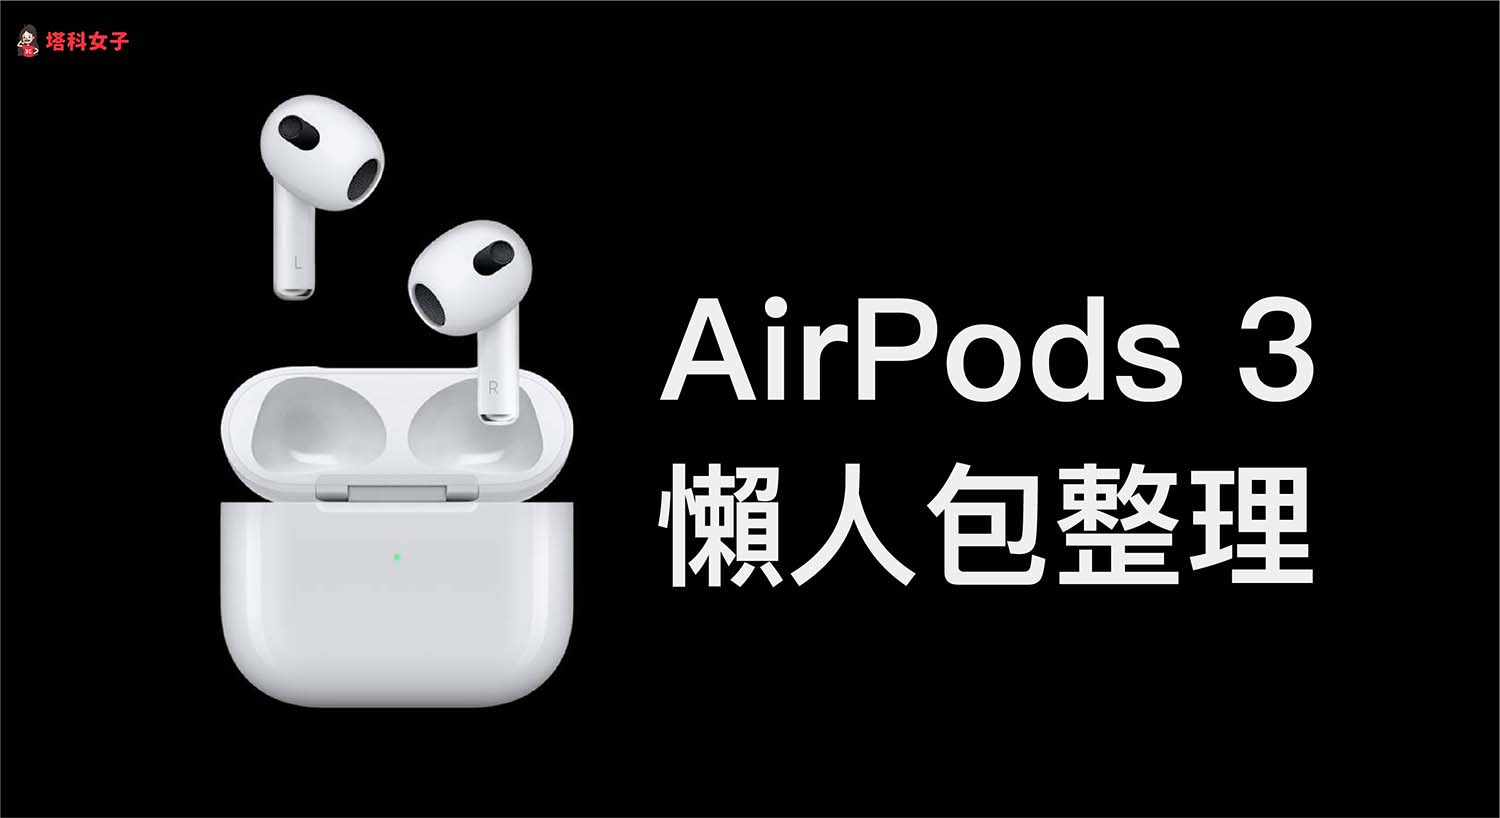 AirPods 3 懶人包：價格、預購日、開賣日、功能與硬體一次看 (含比較)